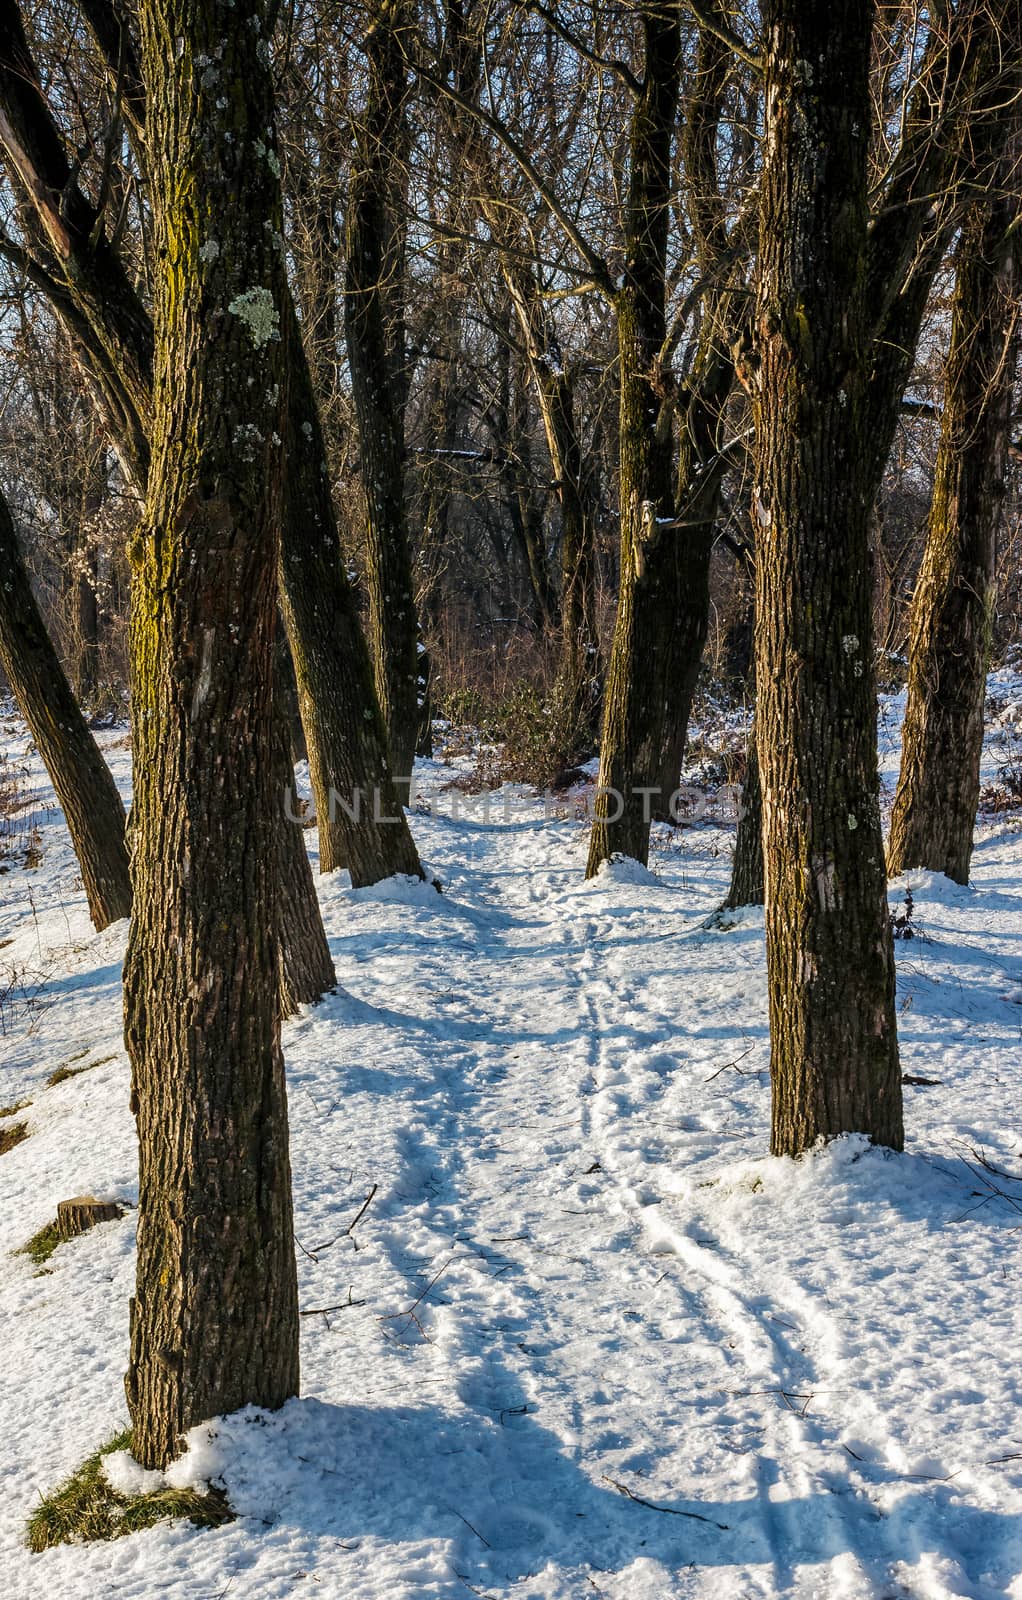 footpath in winter forest by Pellinni